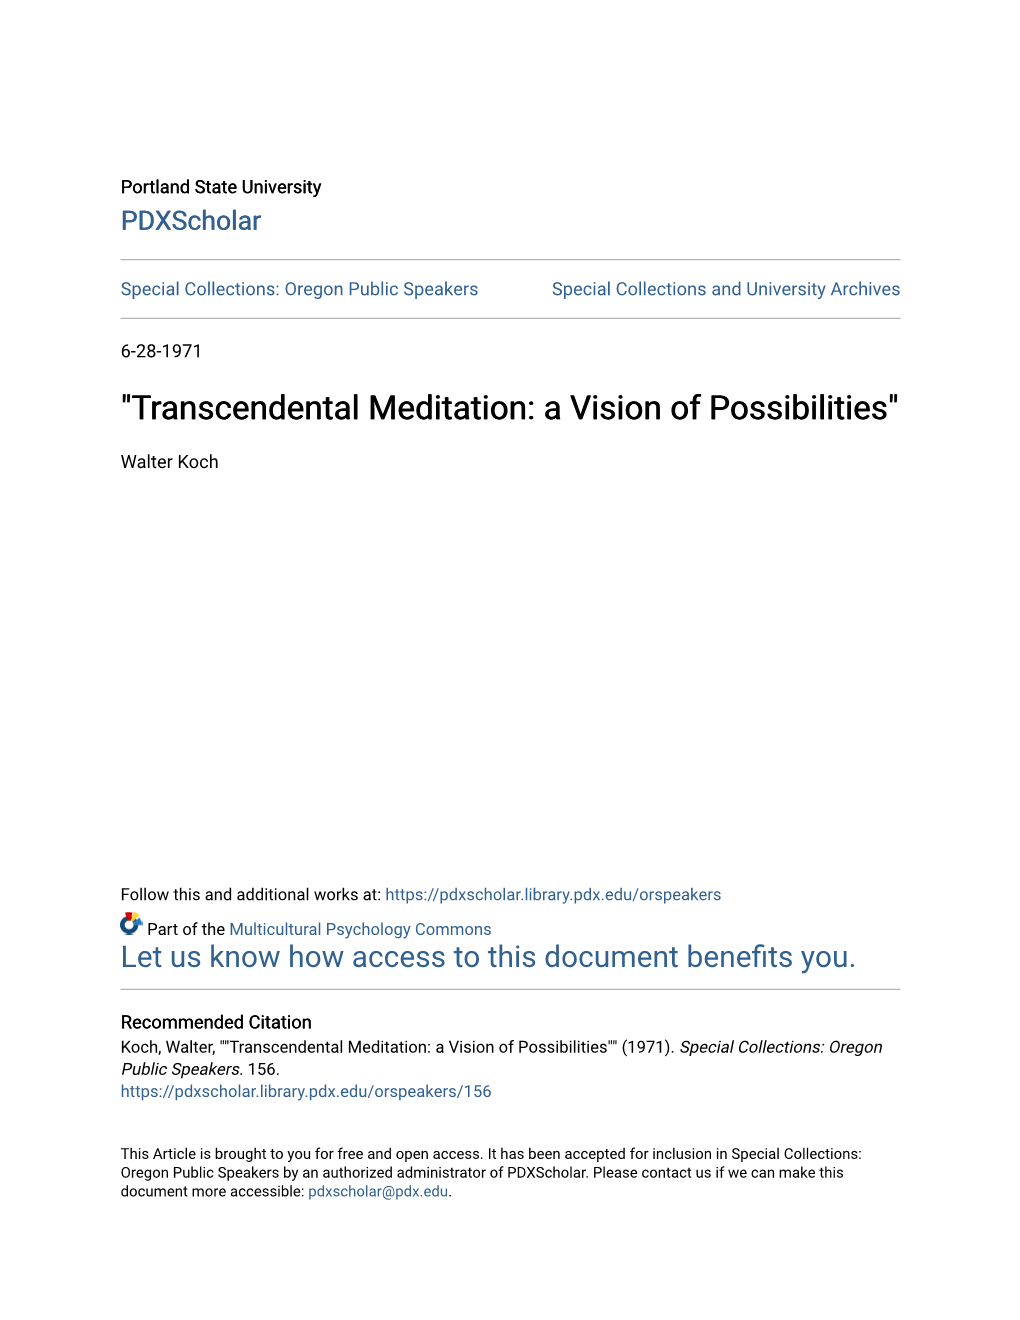 "Transcendental Meditation: a Vision of Possibilities"